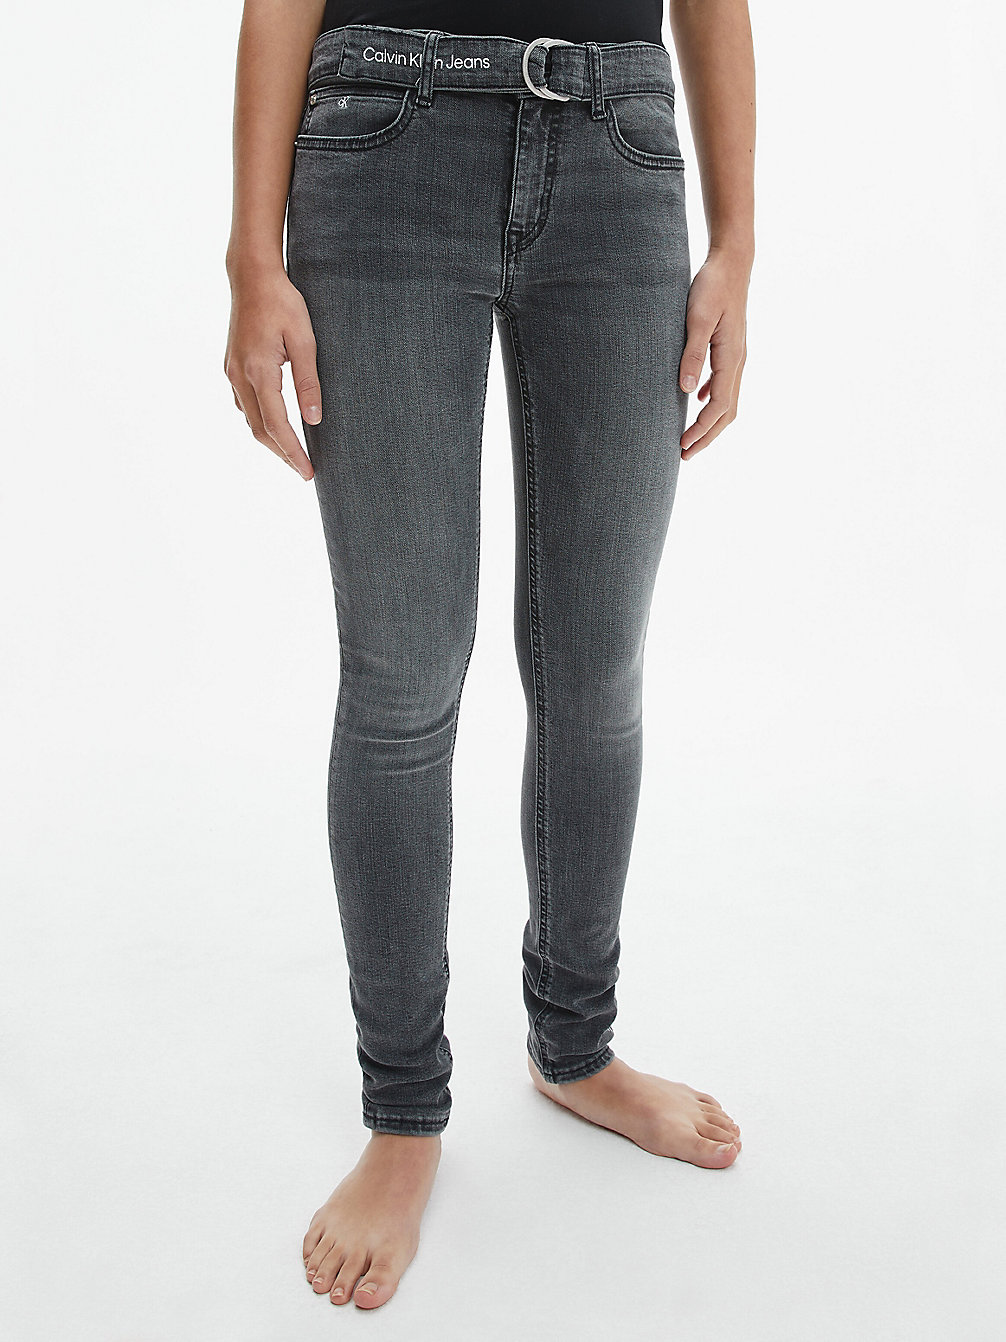 WASHED GREY Belted Skinny Jeans undefined girls Calvin Klein